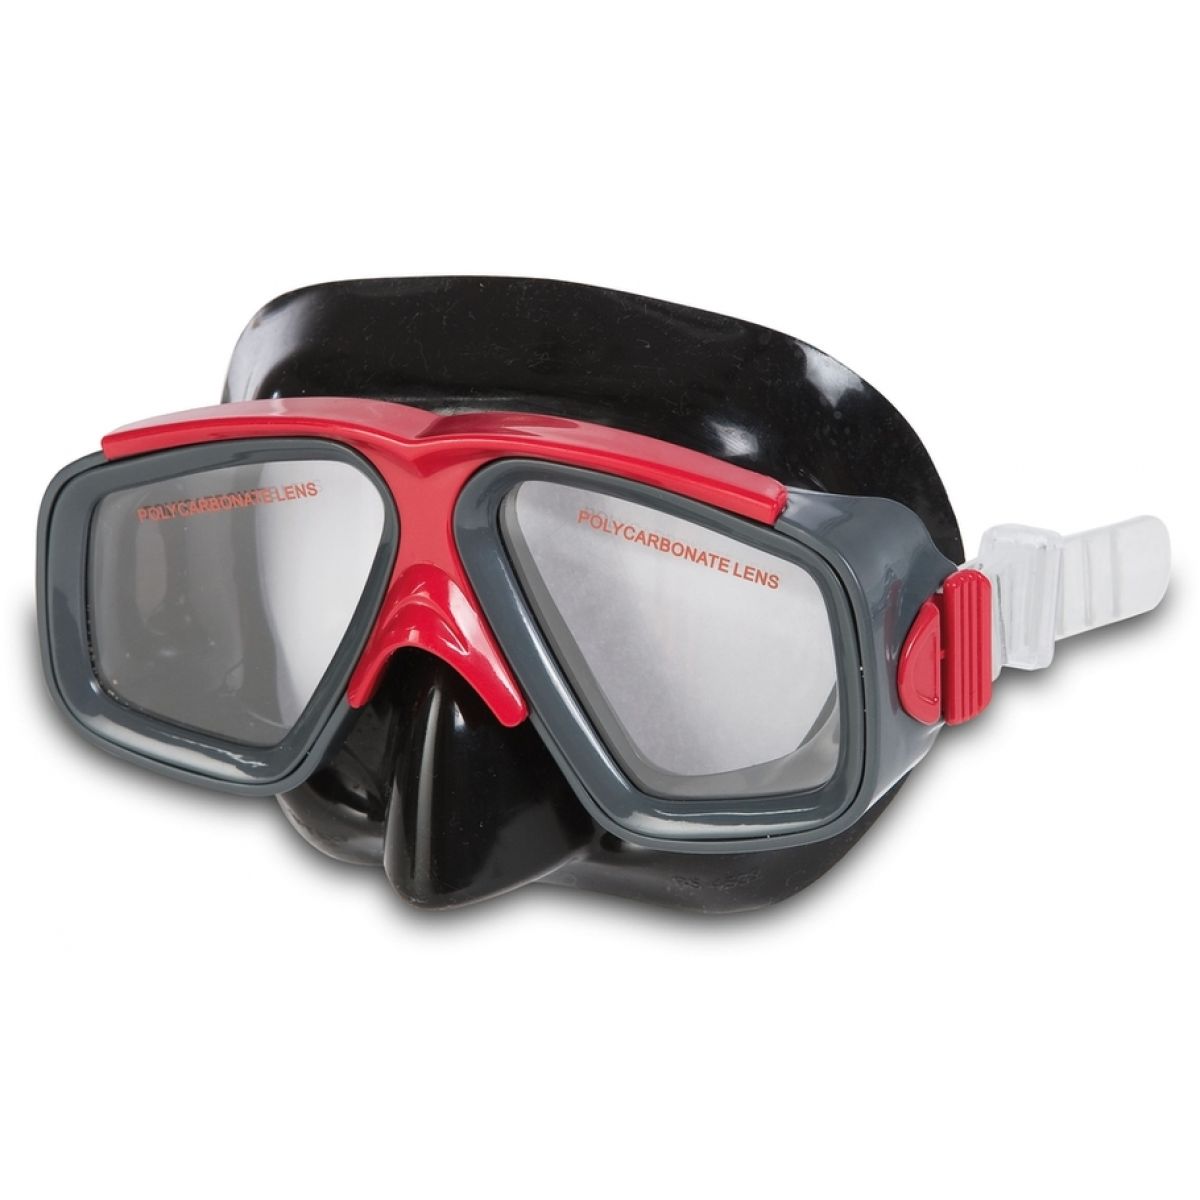 Potápěčské brýle Surf Rider Intex 55975 - Červená